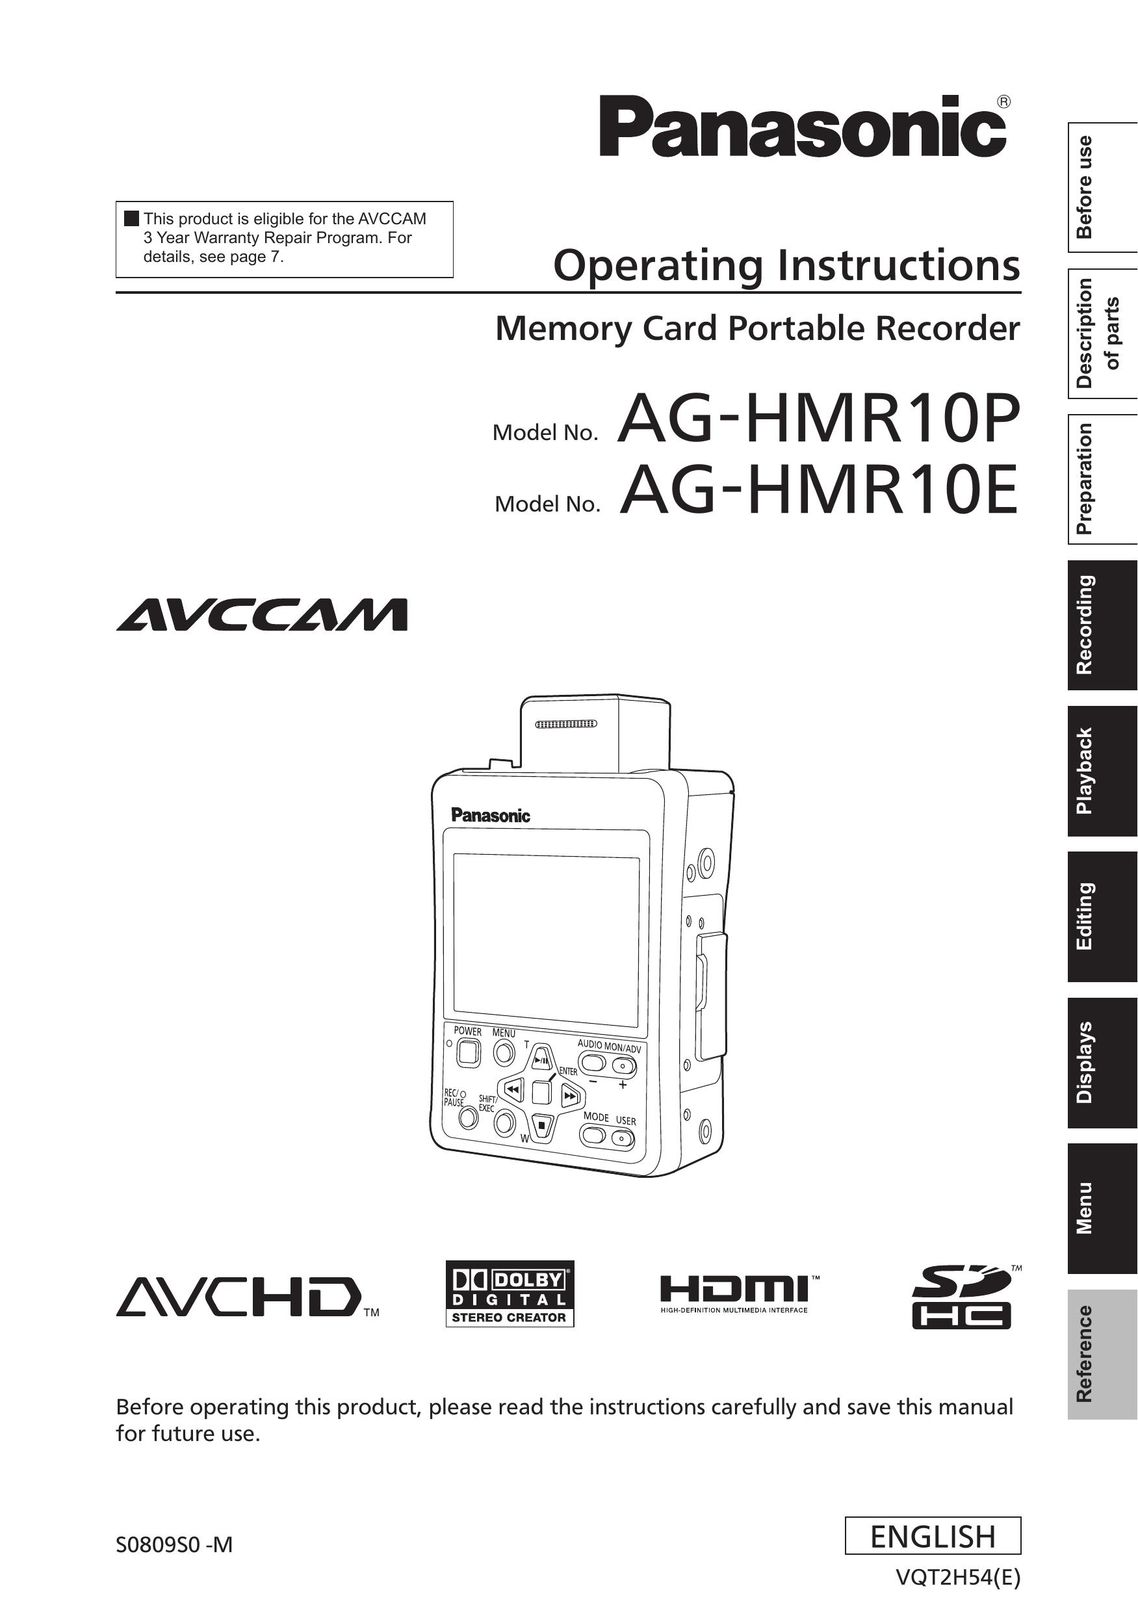 Panasonic AG-HMR10P Video Gaming Accessories User Manual